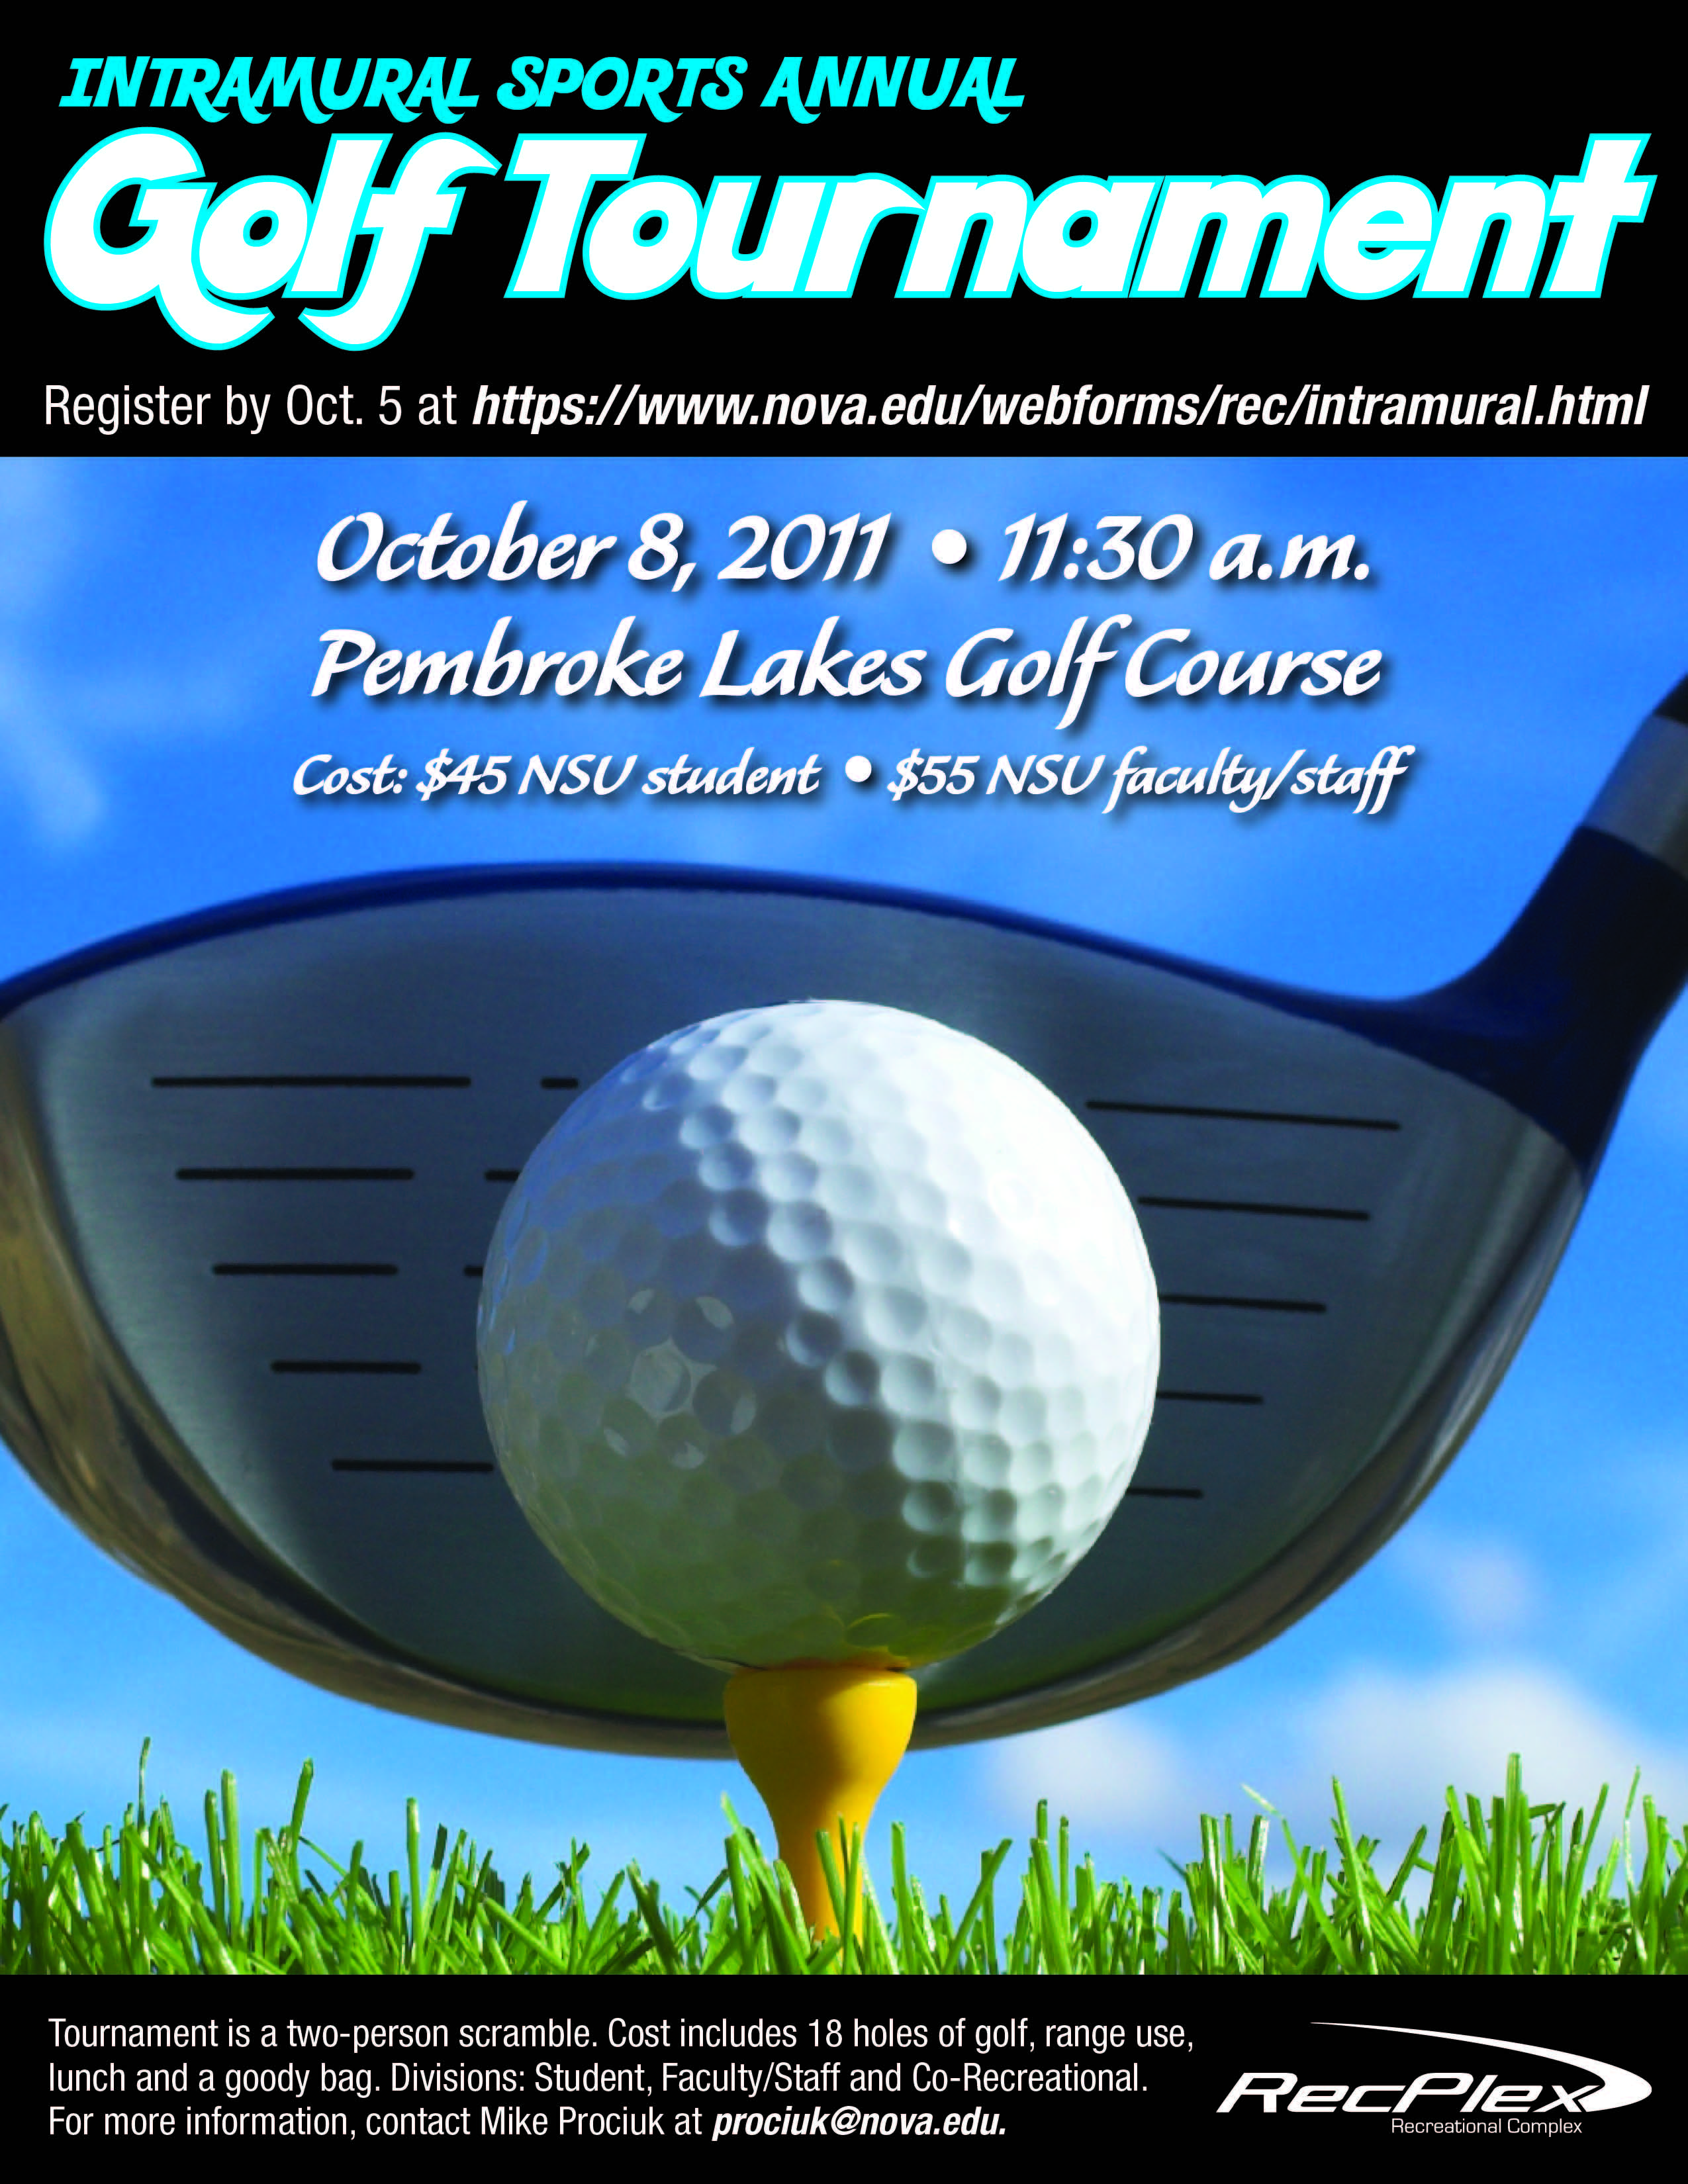 Intramural Sports Annual Golf Tournament, Registration Deadline is Oct